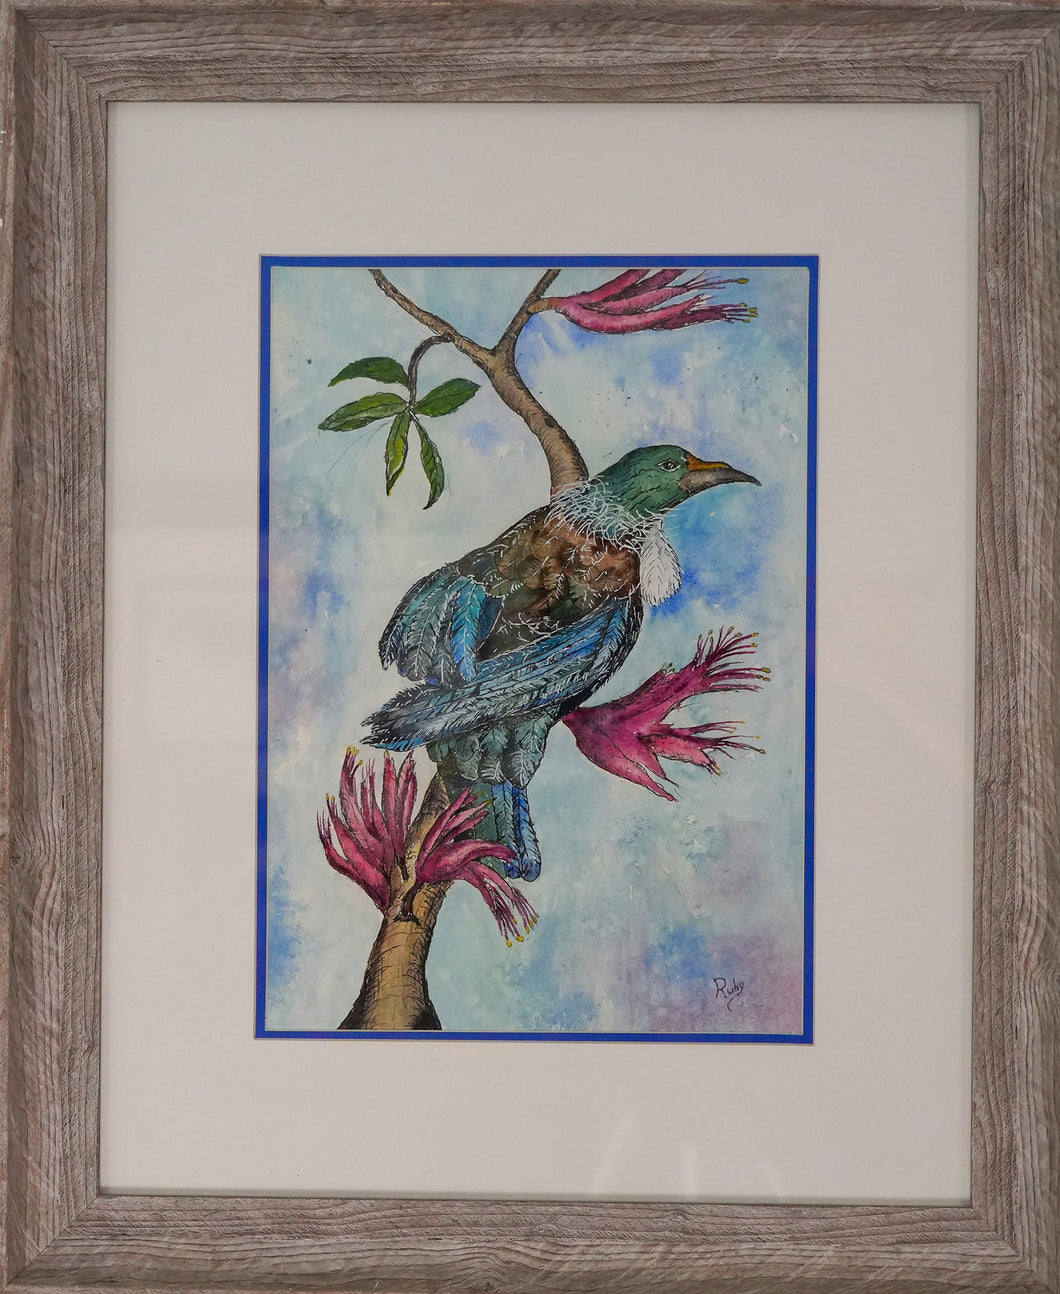 *Tui Bird (New Zealand) (19 x 24 in. framed)